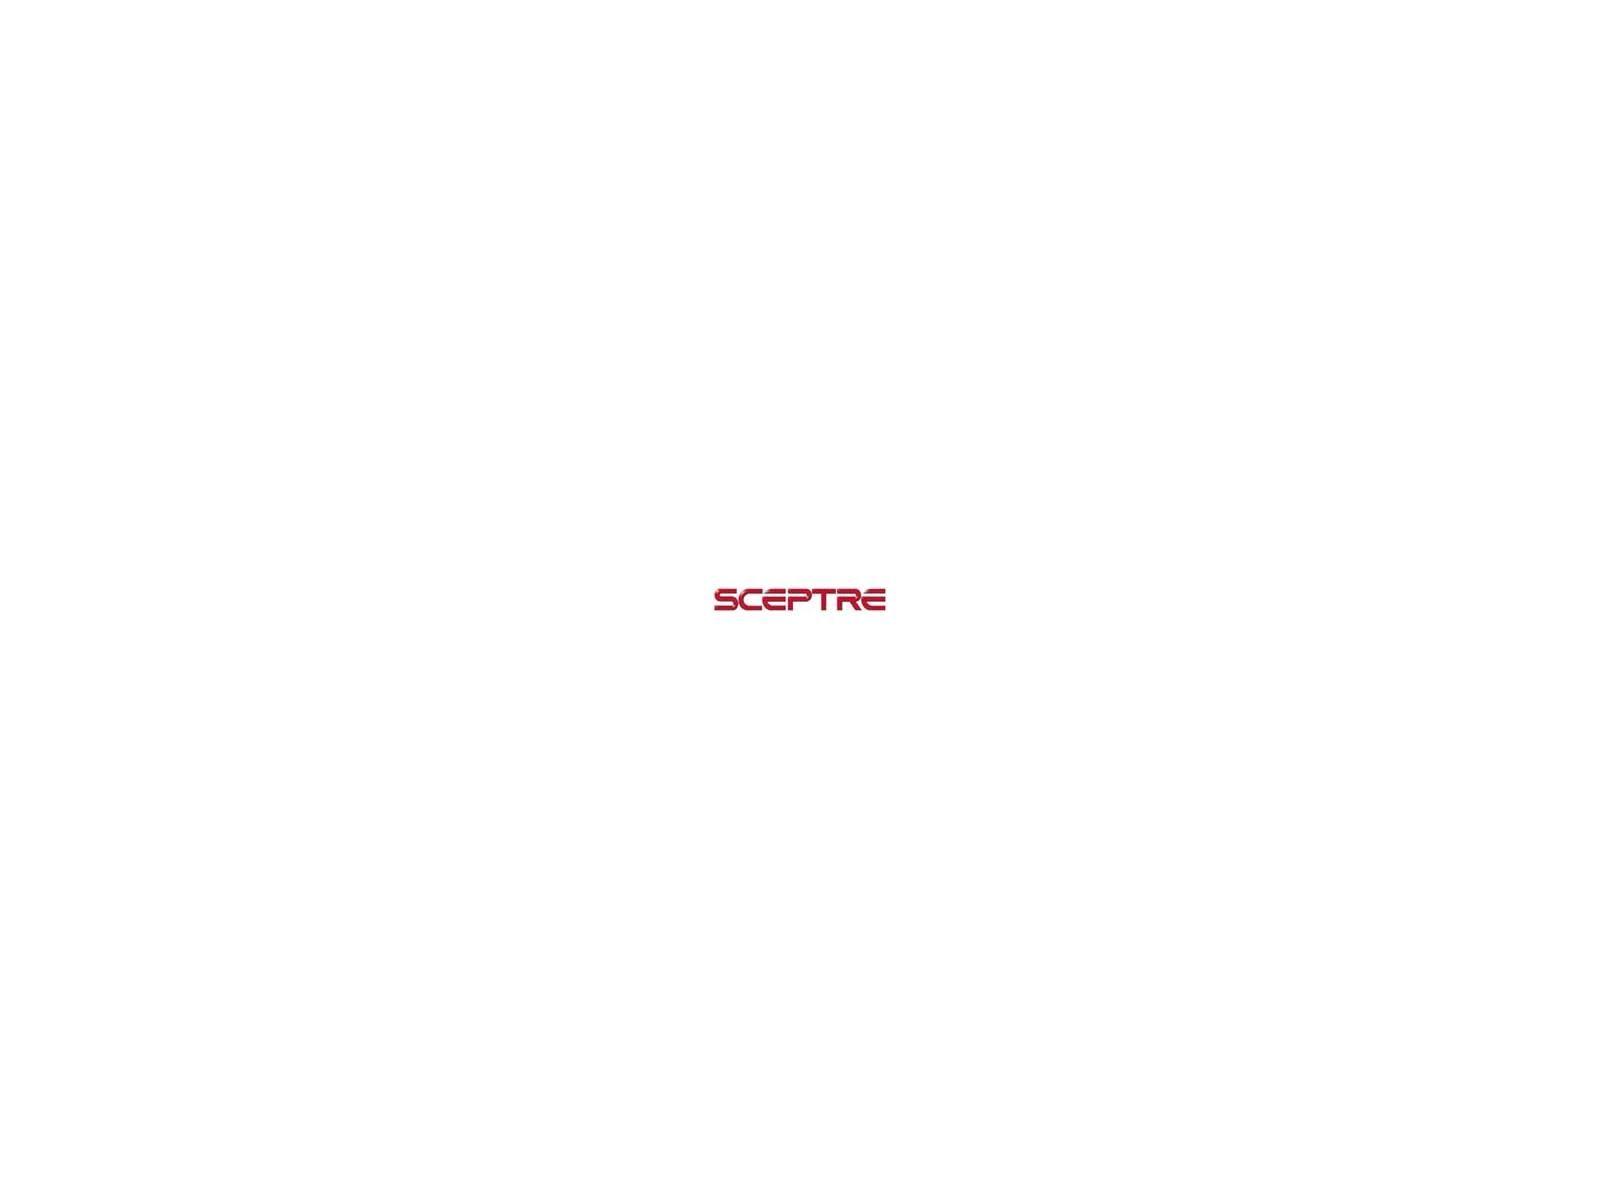 Sceptre Logo - Sceptre X37SV-Naga Widescreen HDTV - Page 3 | HotHardware